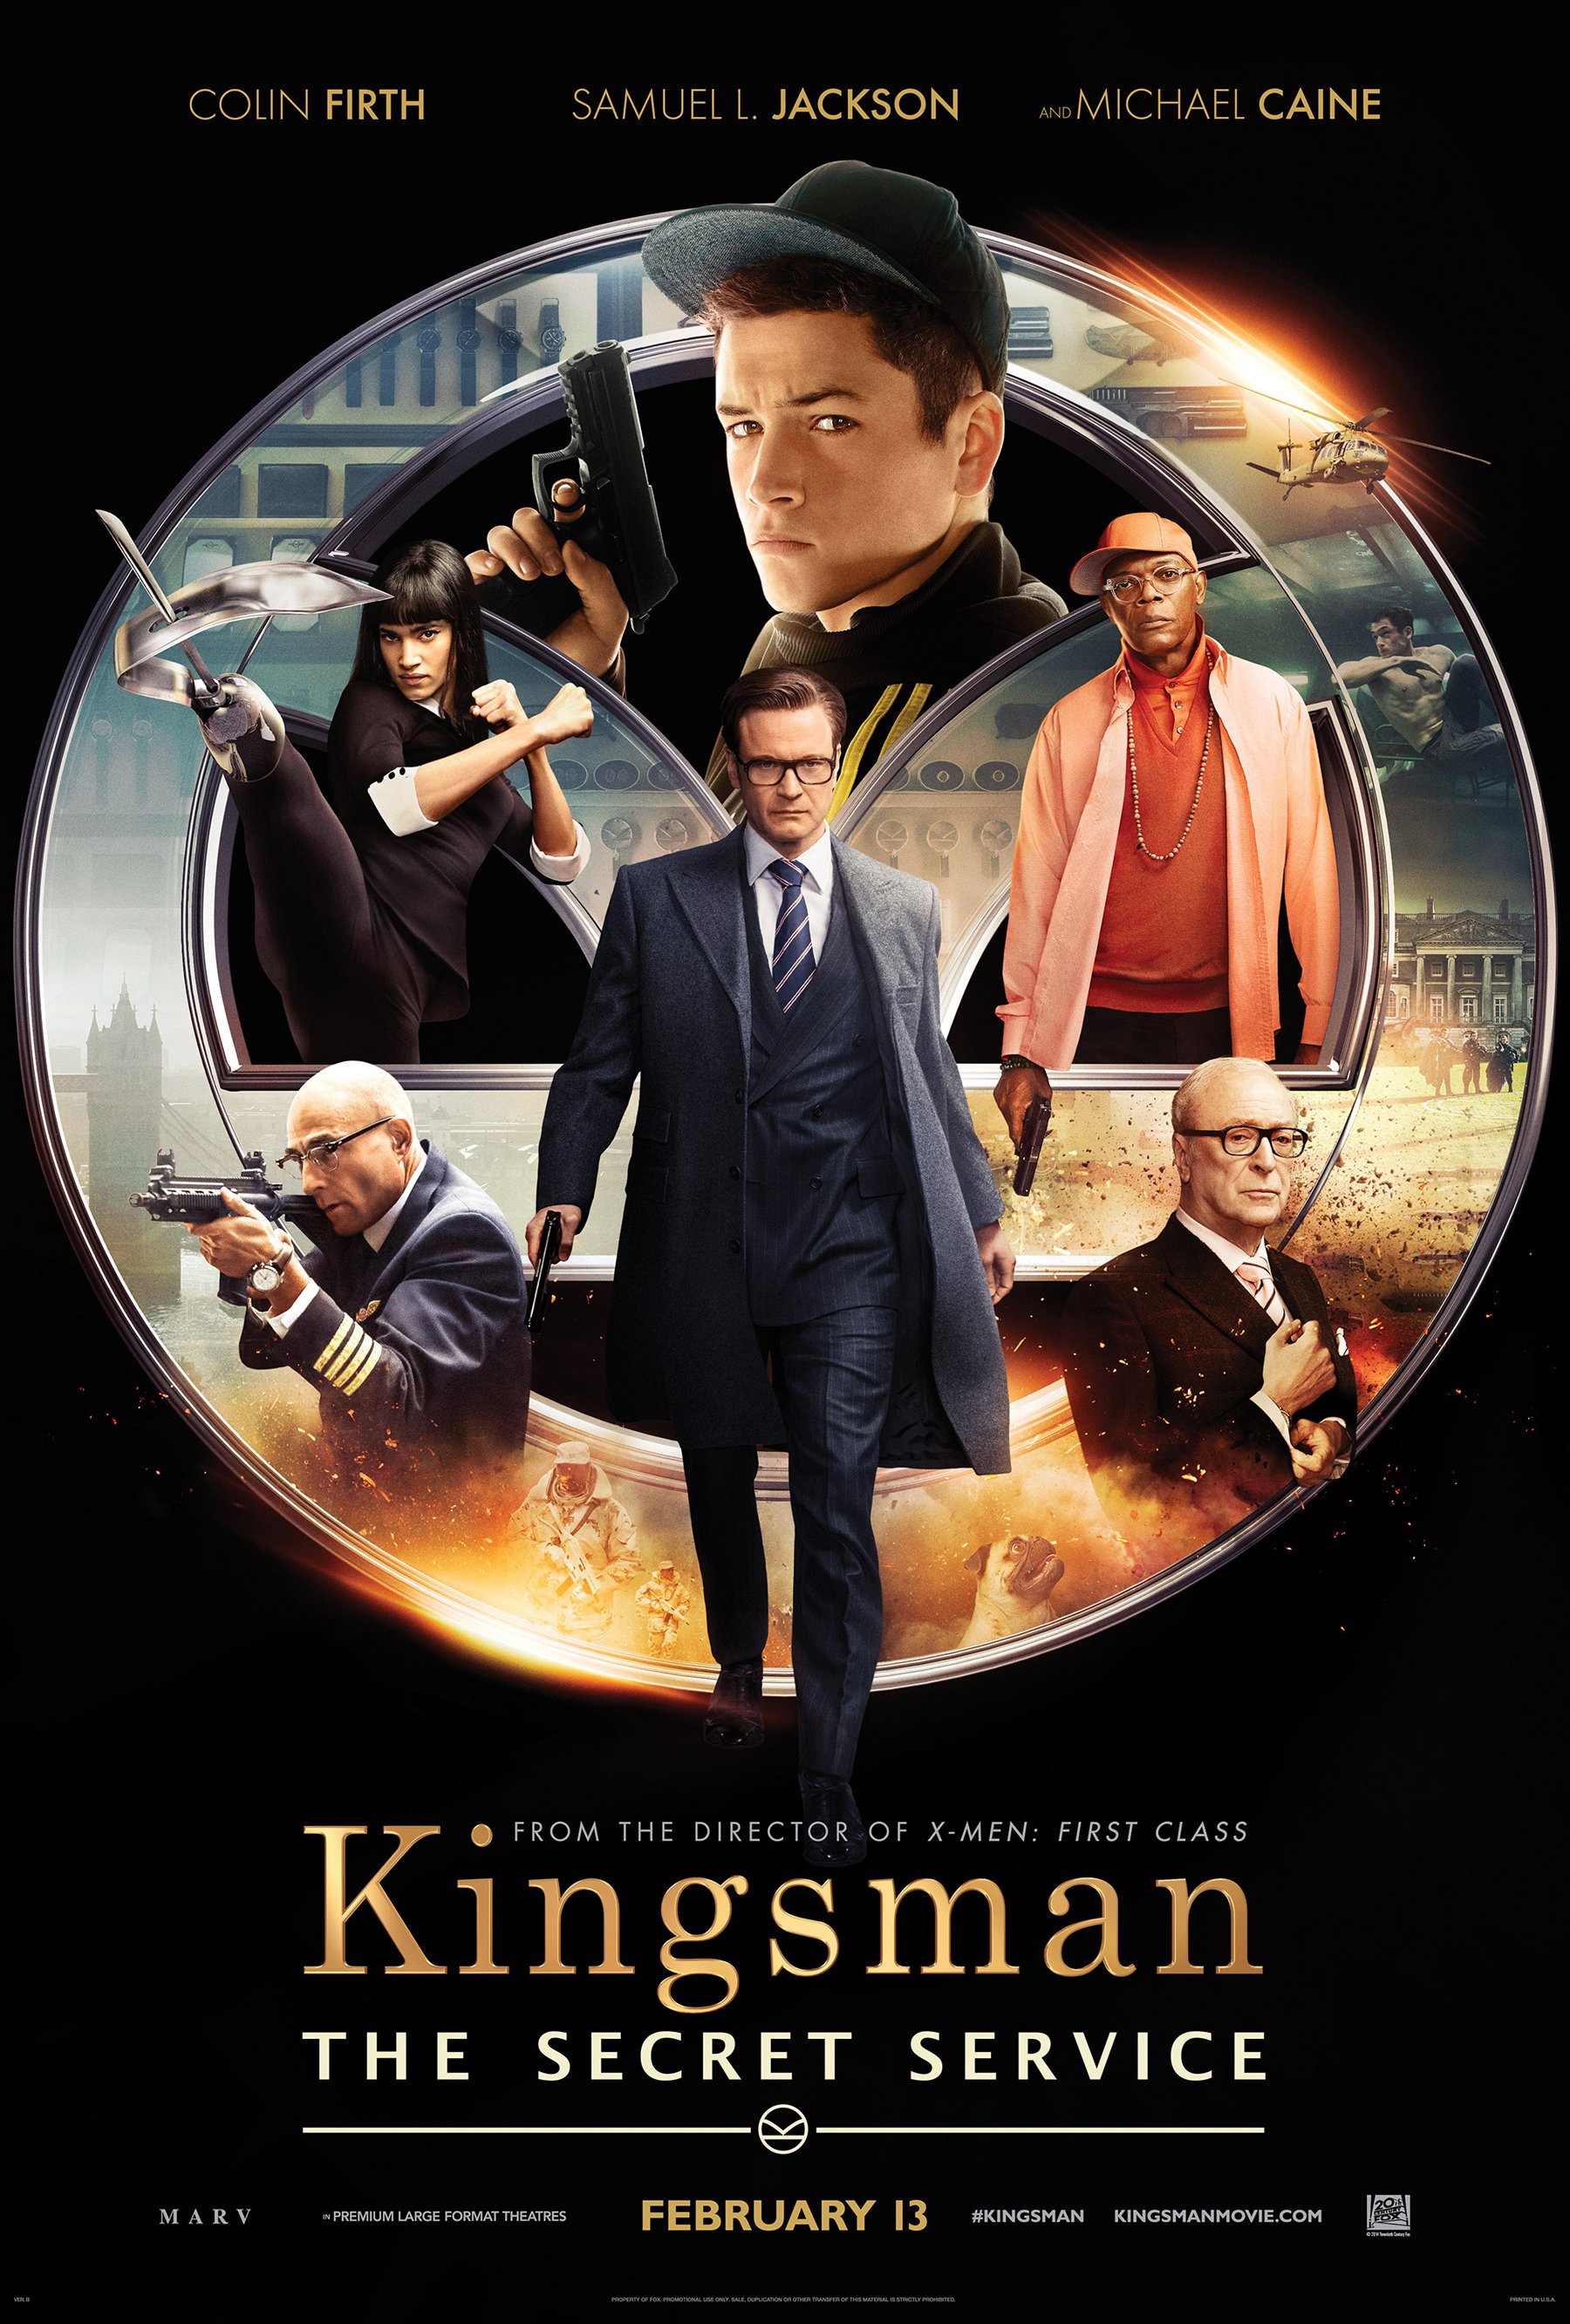 Poster of the movie Kingsman: Services secrets v.f.